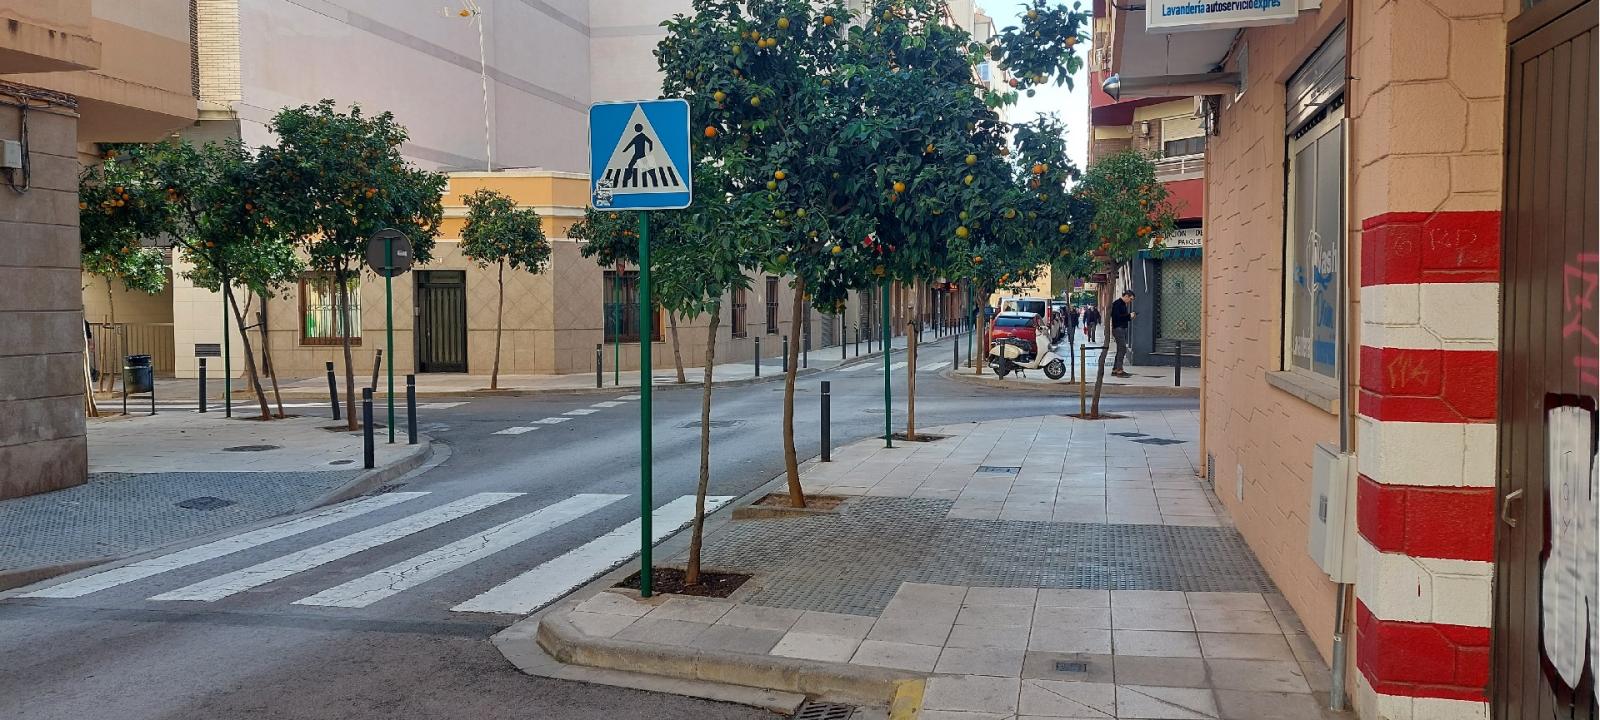 Lokal zum verkauf in Castellón de la Plana